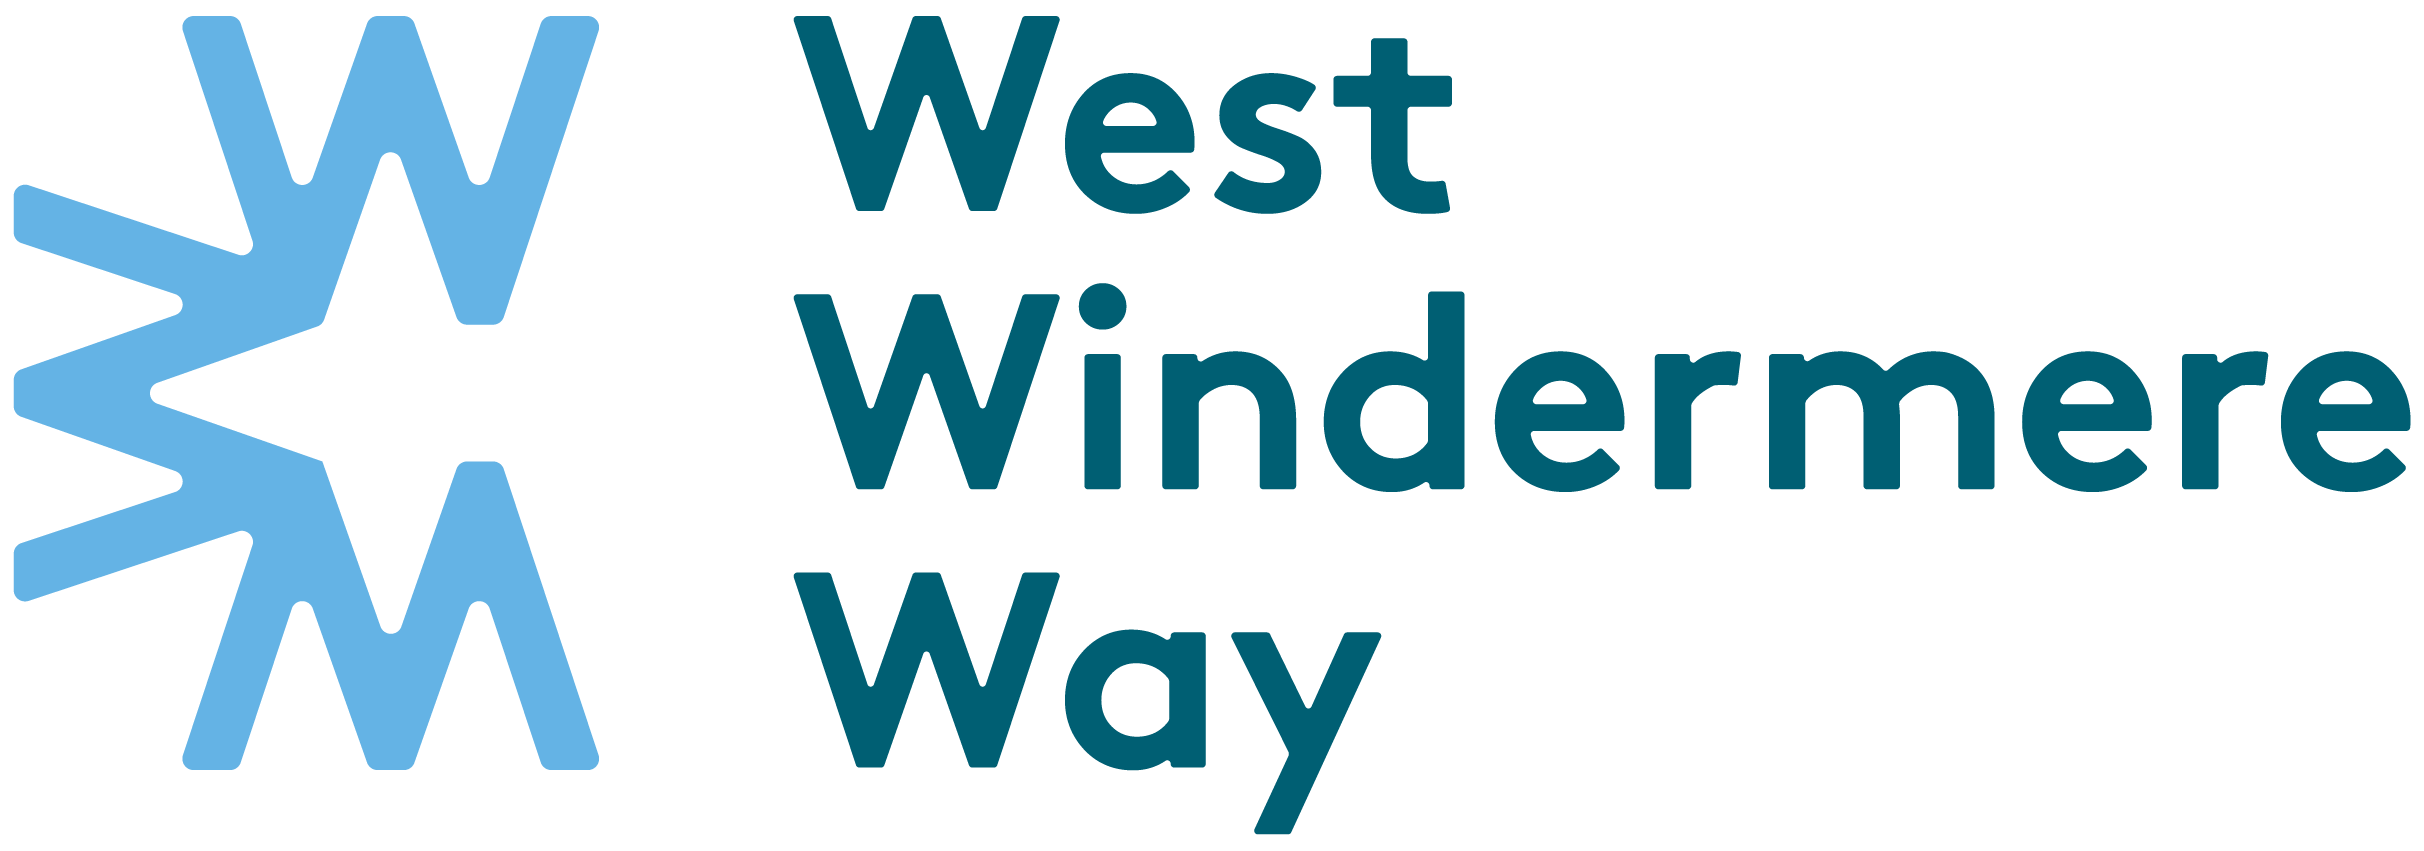 West Windermere Way